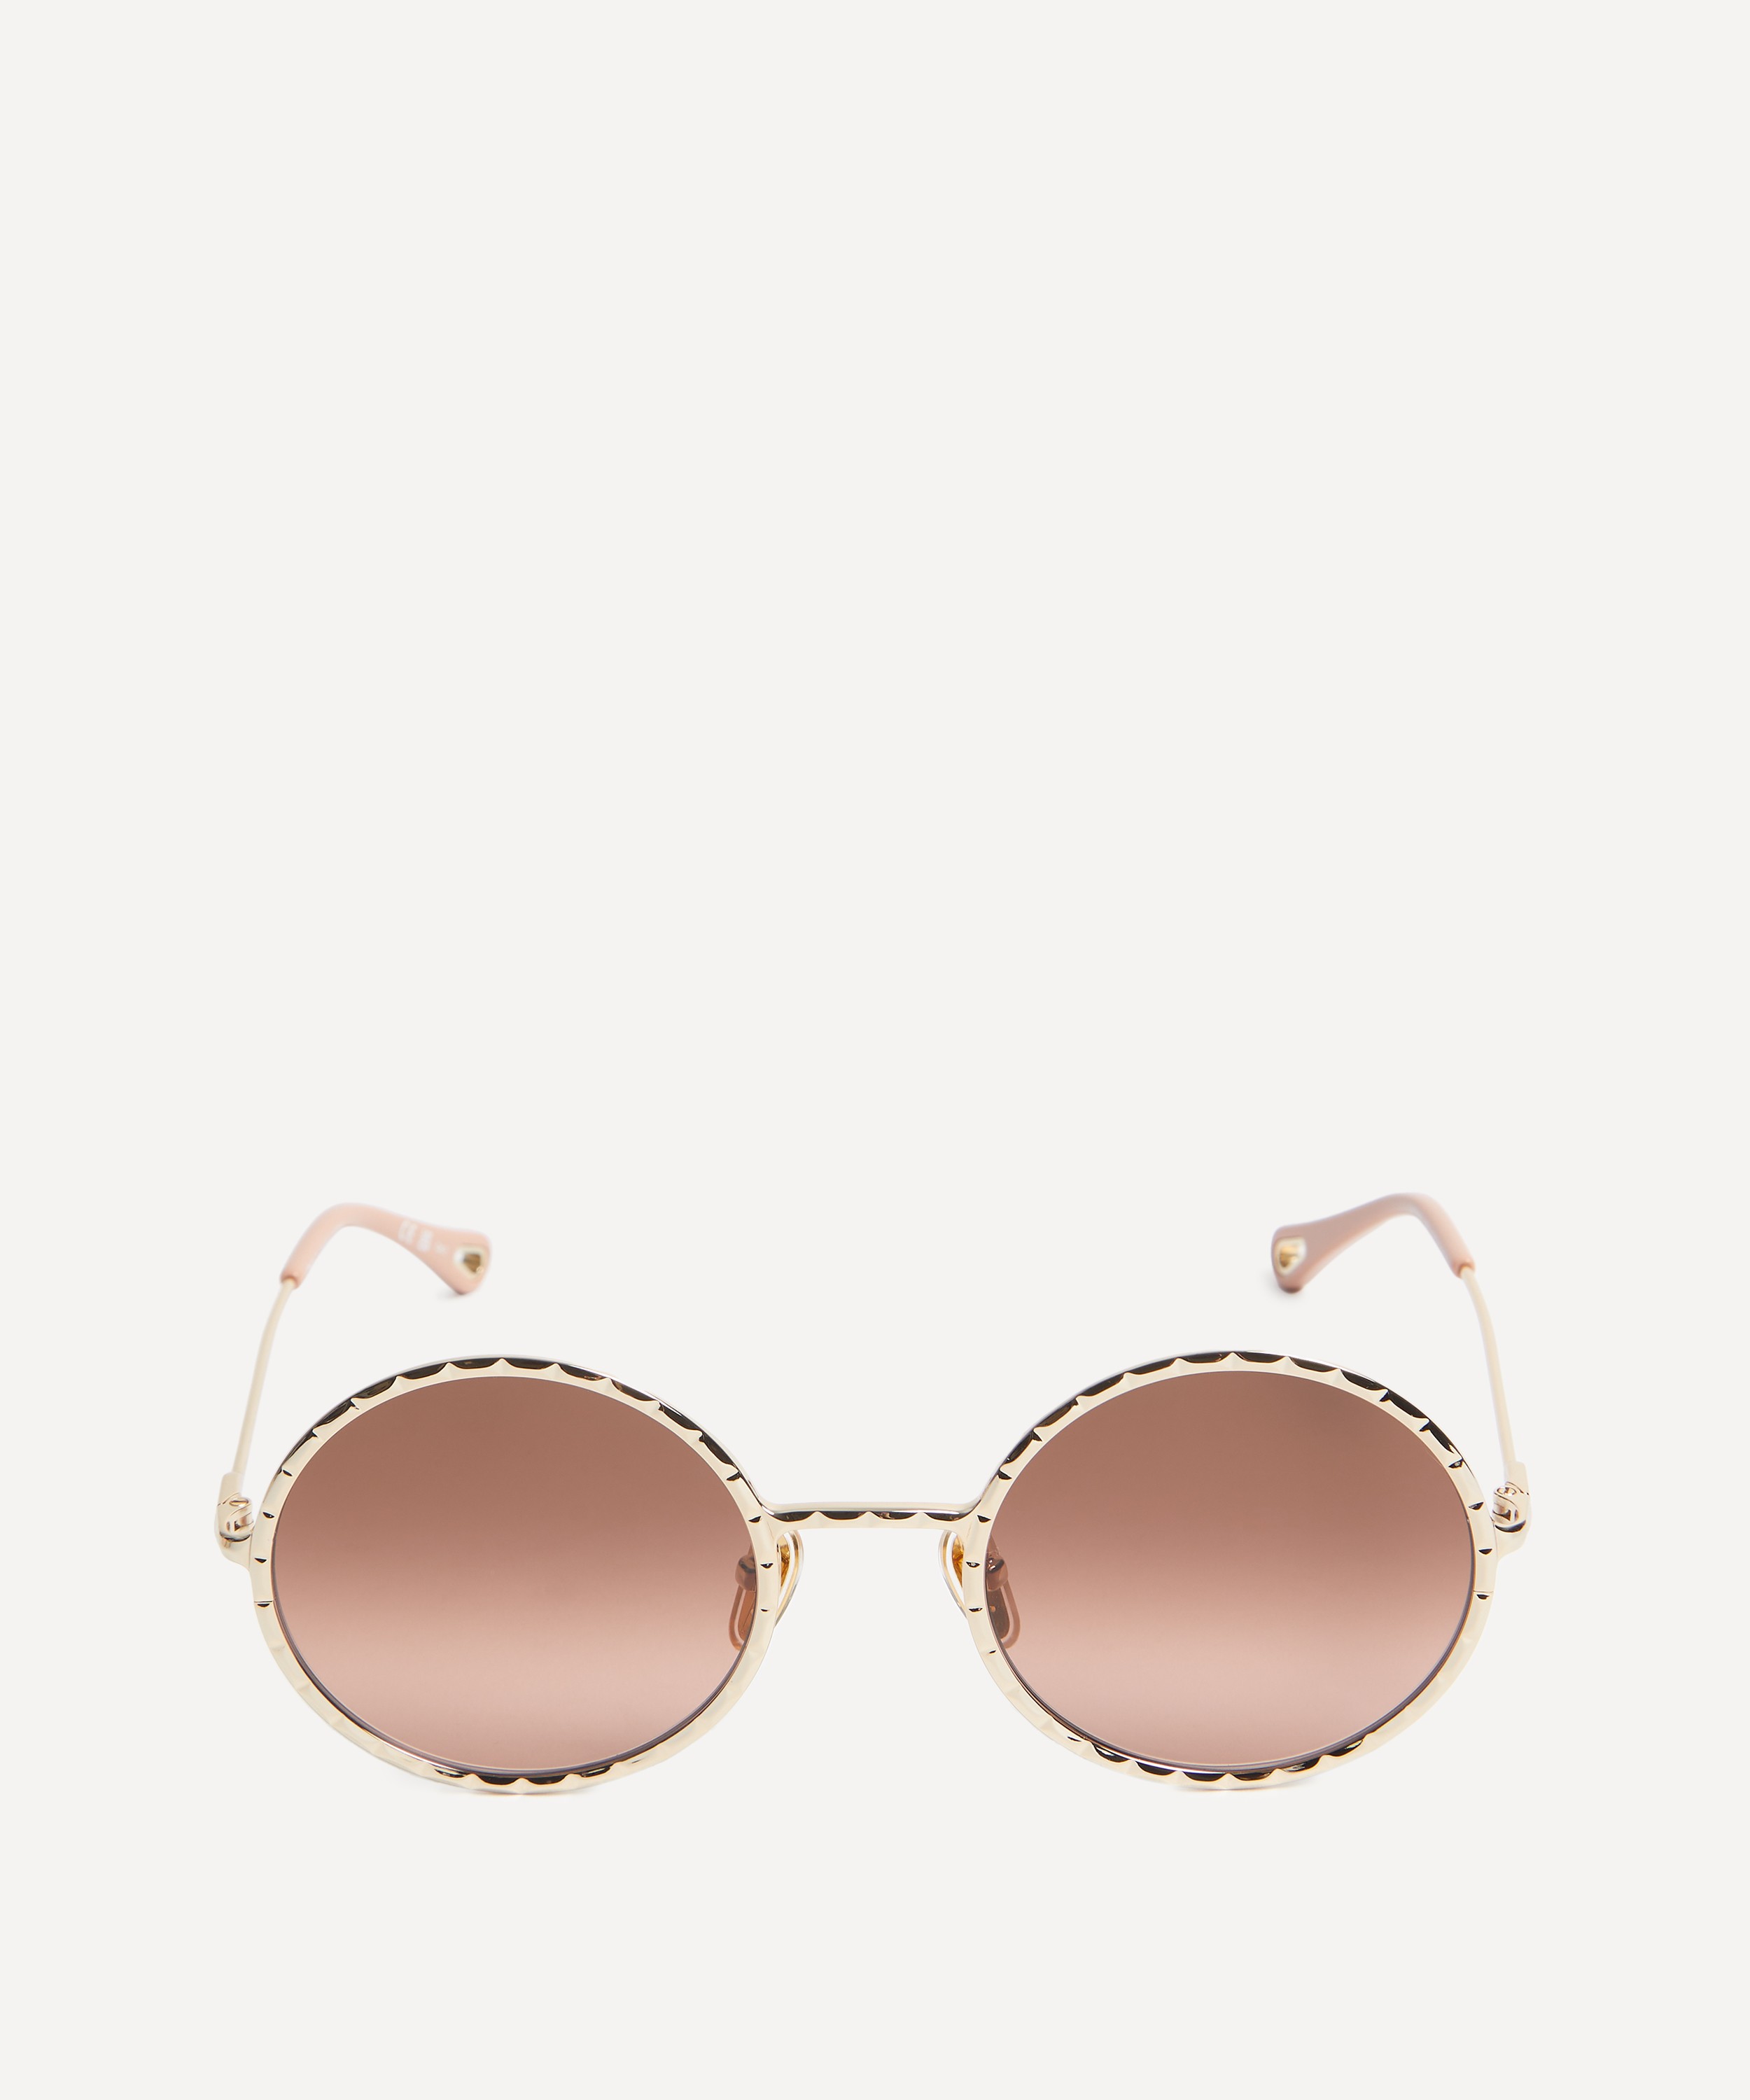 Chloé - Round Sunglasses